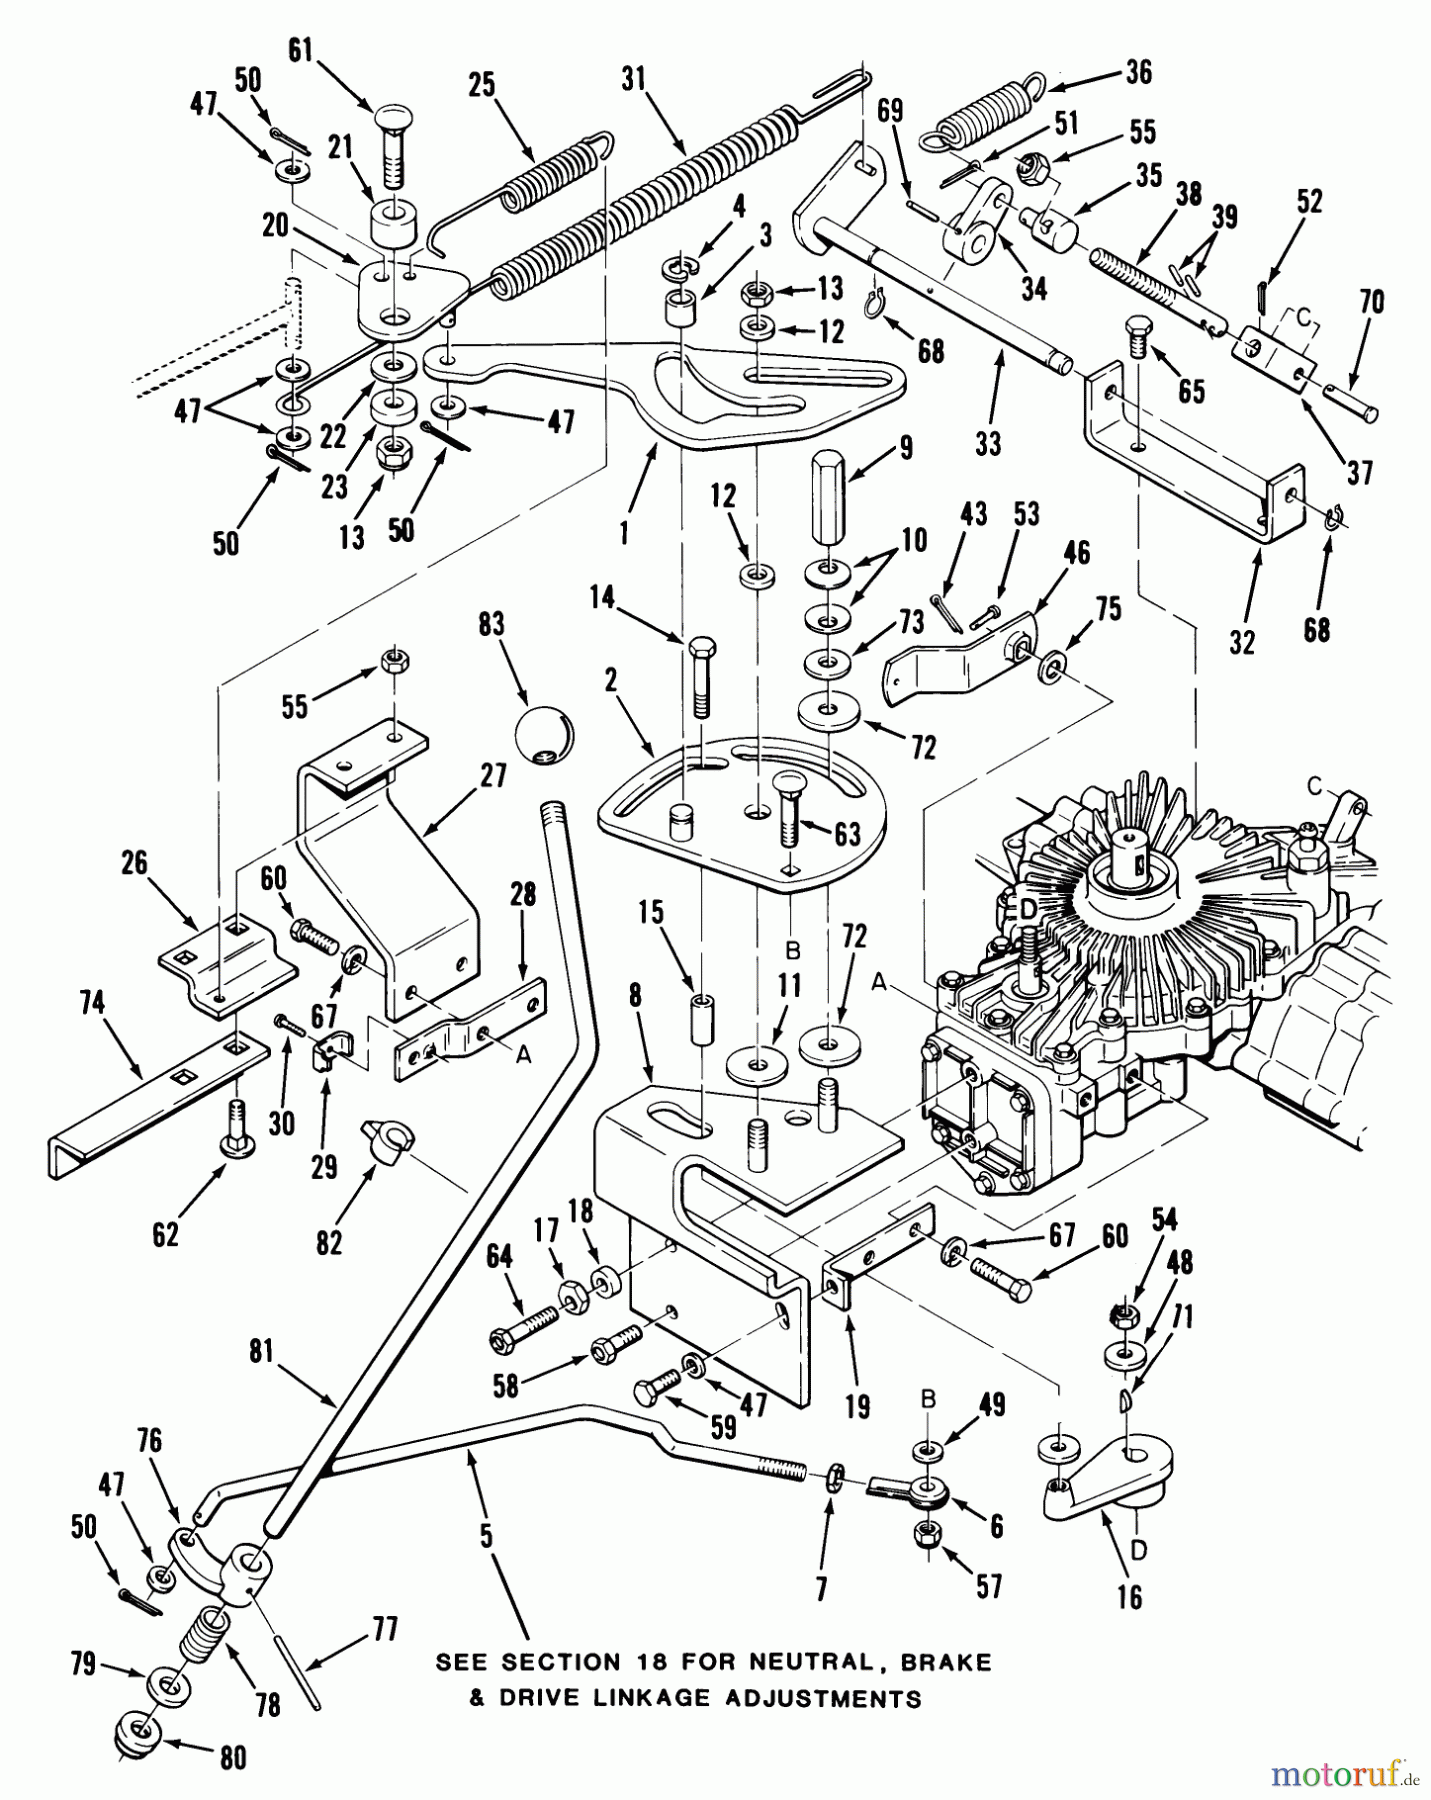  Toro Neu Mowers, Lawn & Garden Tractor Seite 1 42-11B501 (211-5) - Toro 211-5 Tractor, 1989 HYDROSTATIC TRANSAXLE-CONTROL LINKAGE